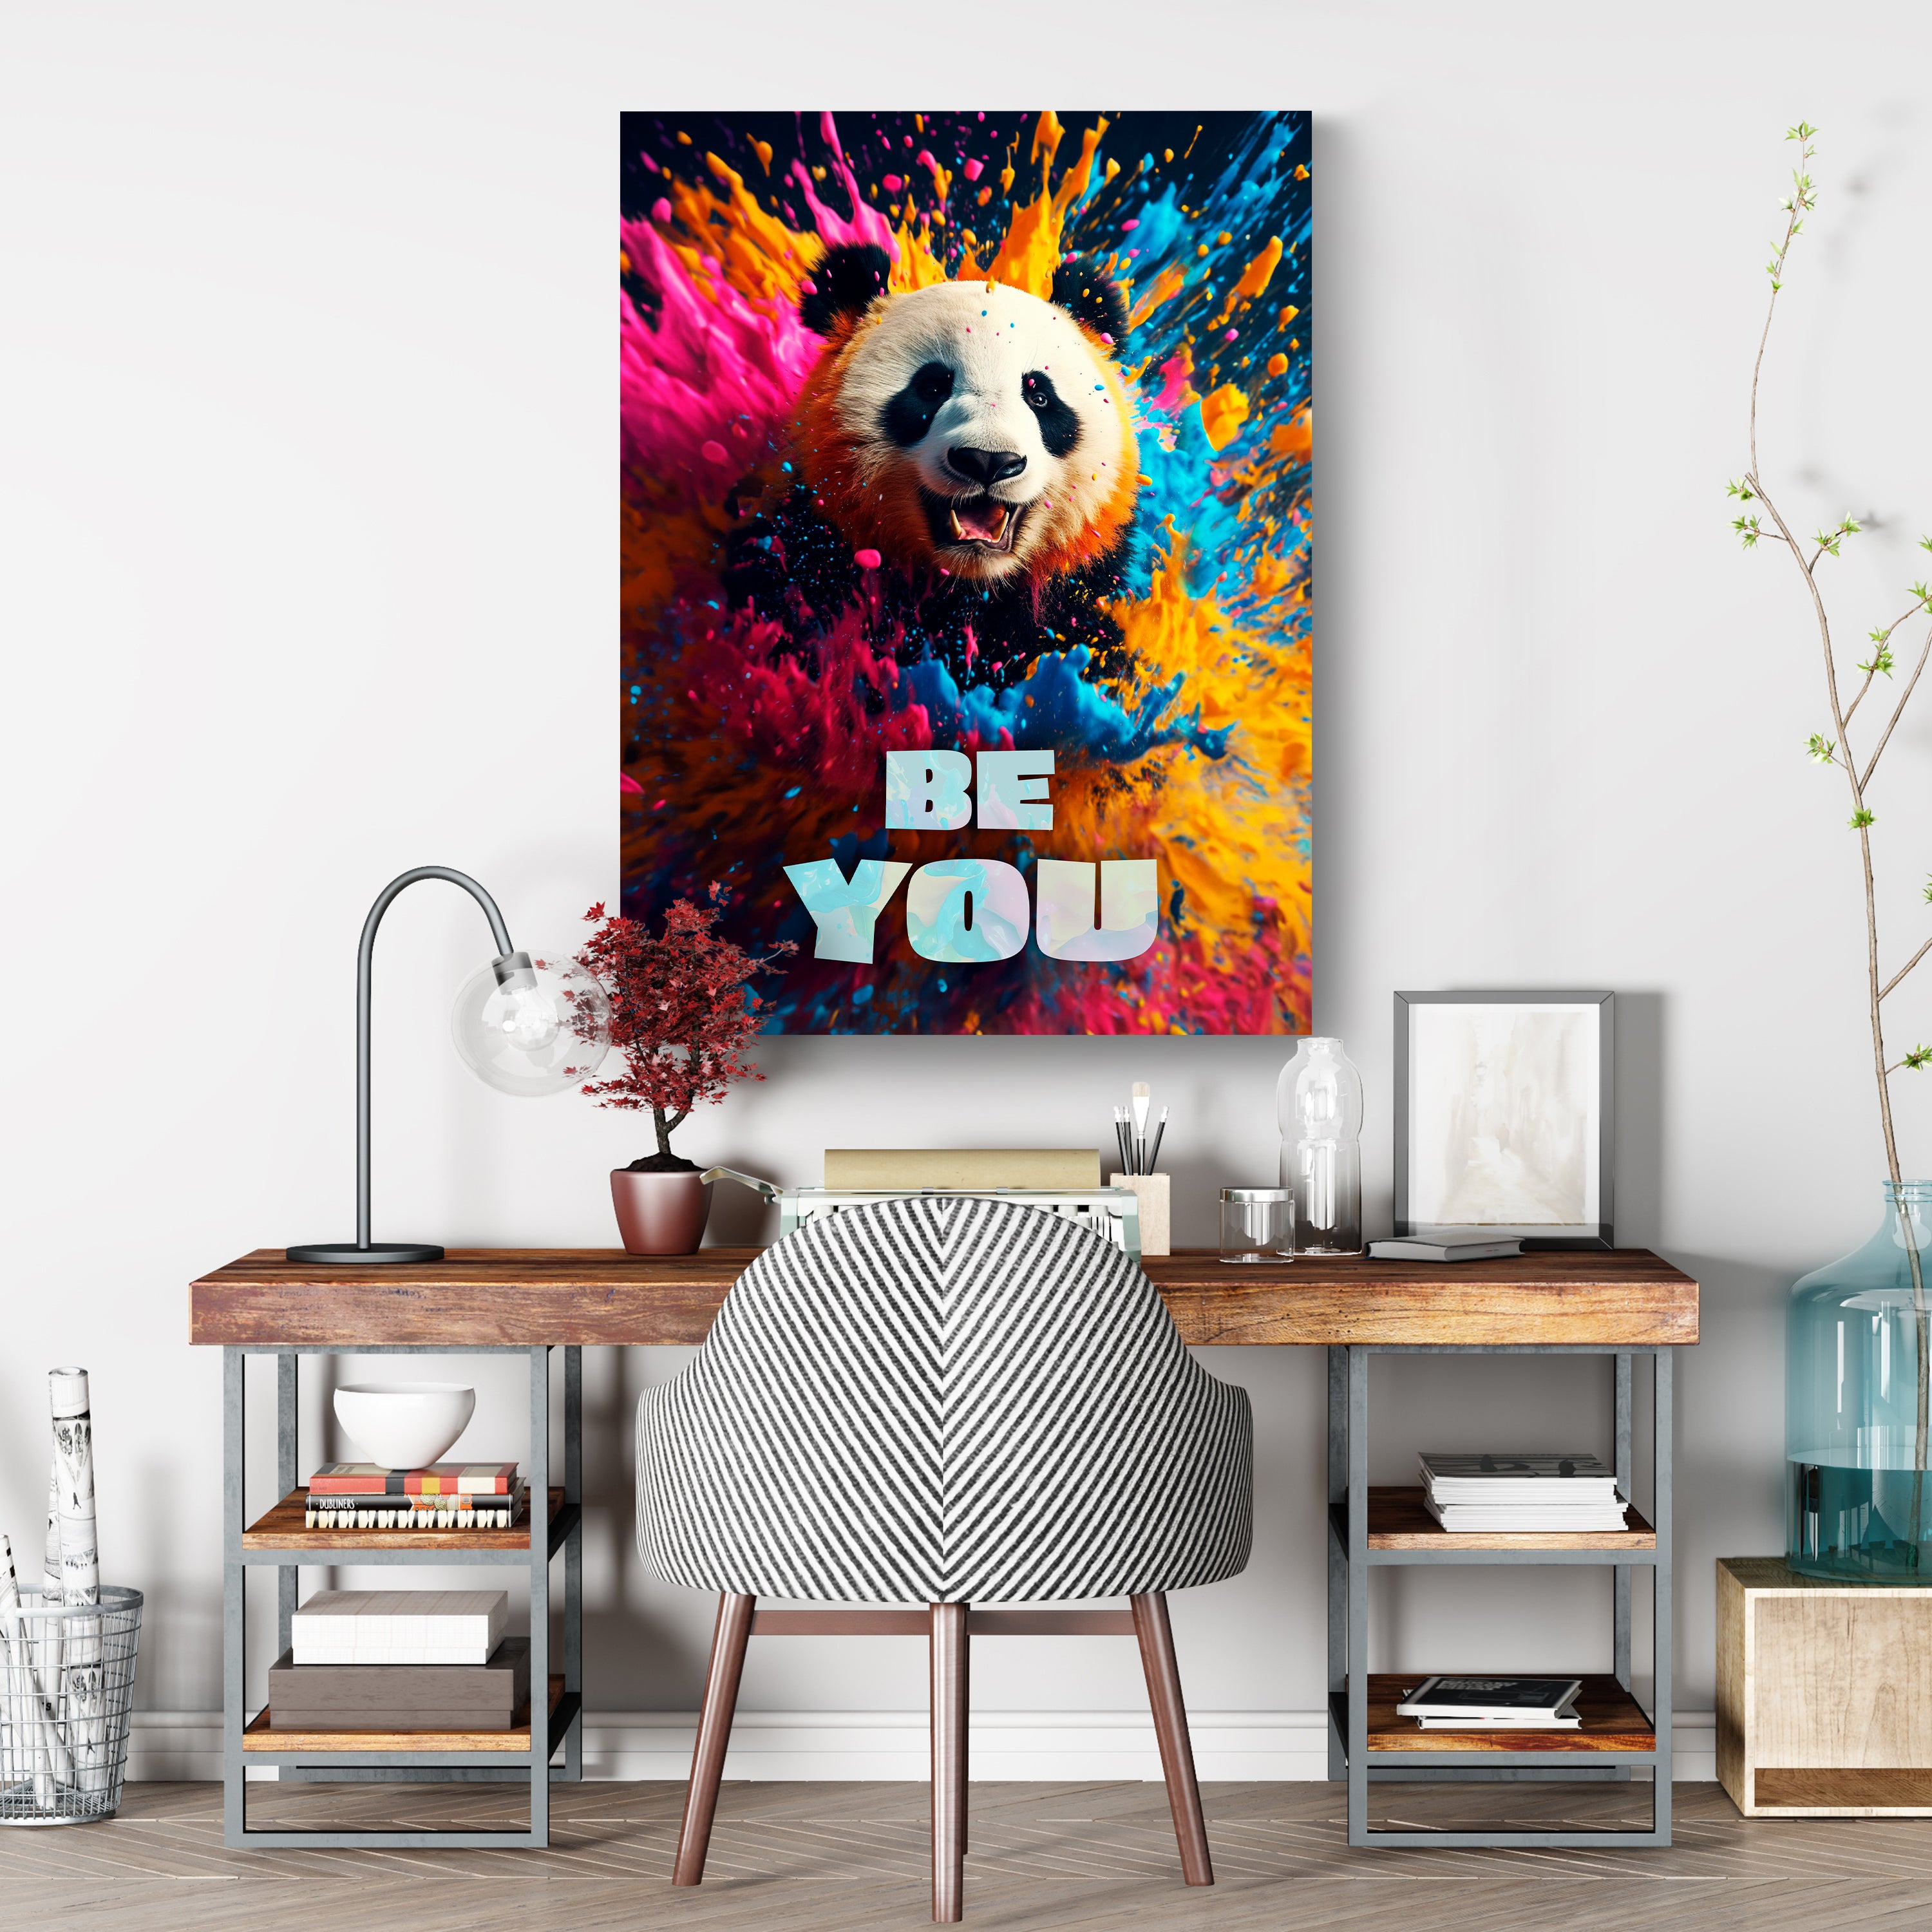 Leinwandbild Spruch Be You, Panda M0825 kaufen - Bild 3